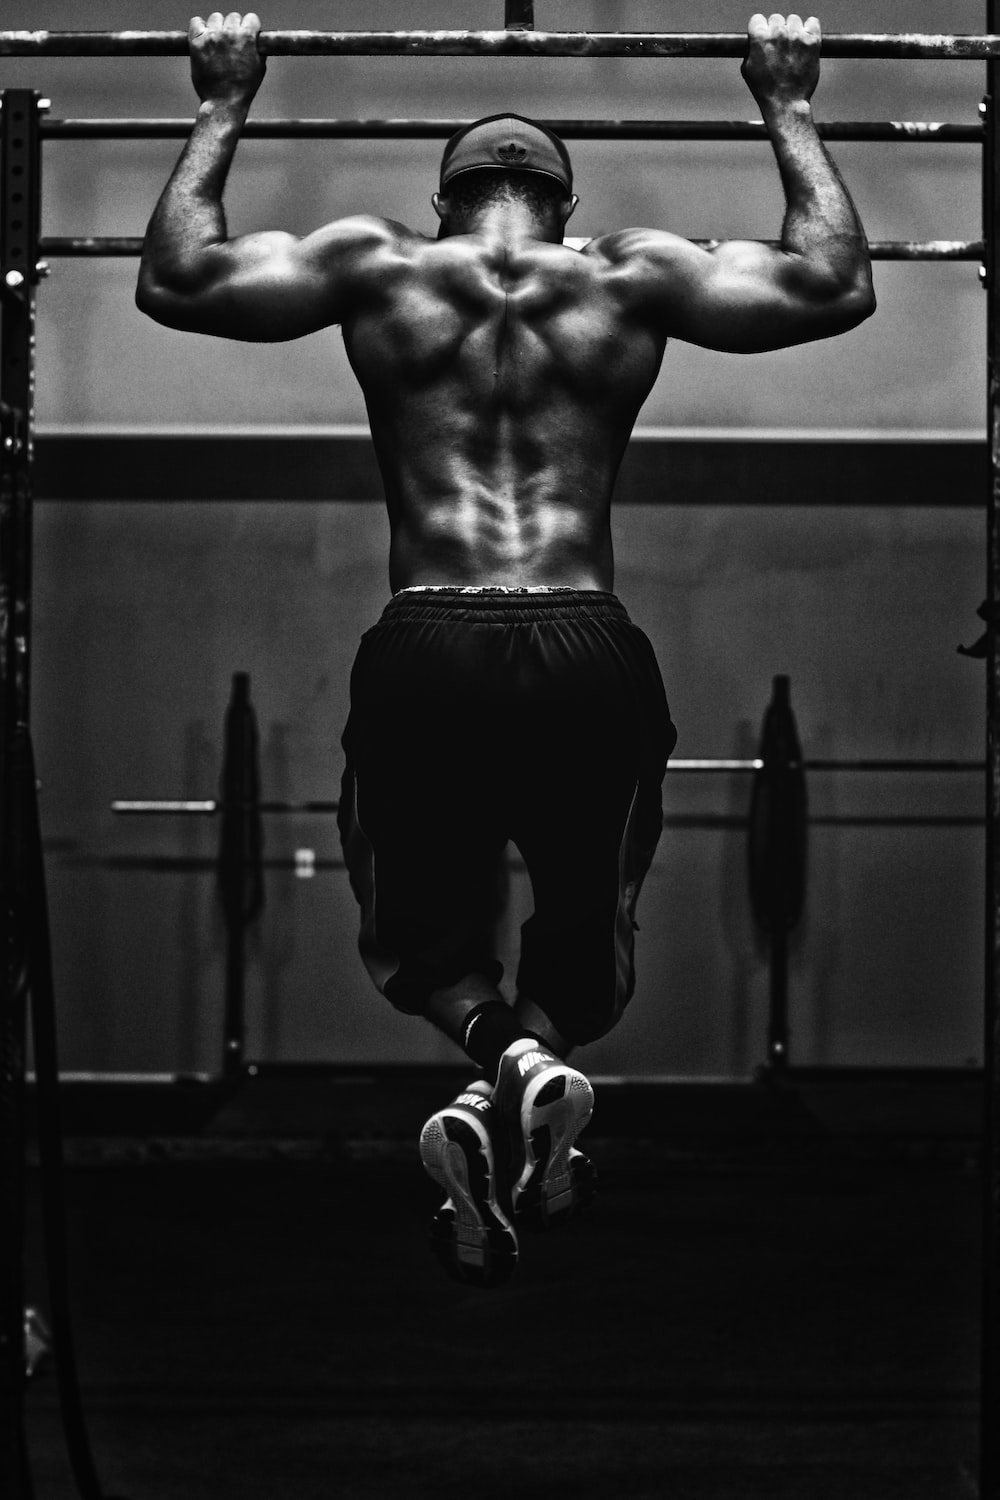 Dark Gym Picture. Download Free Image